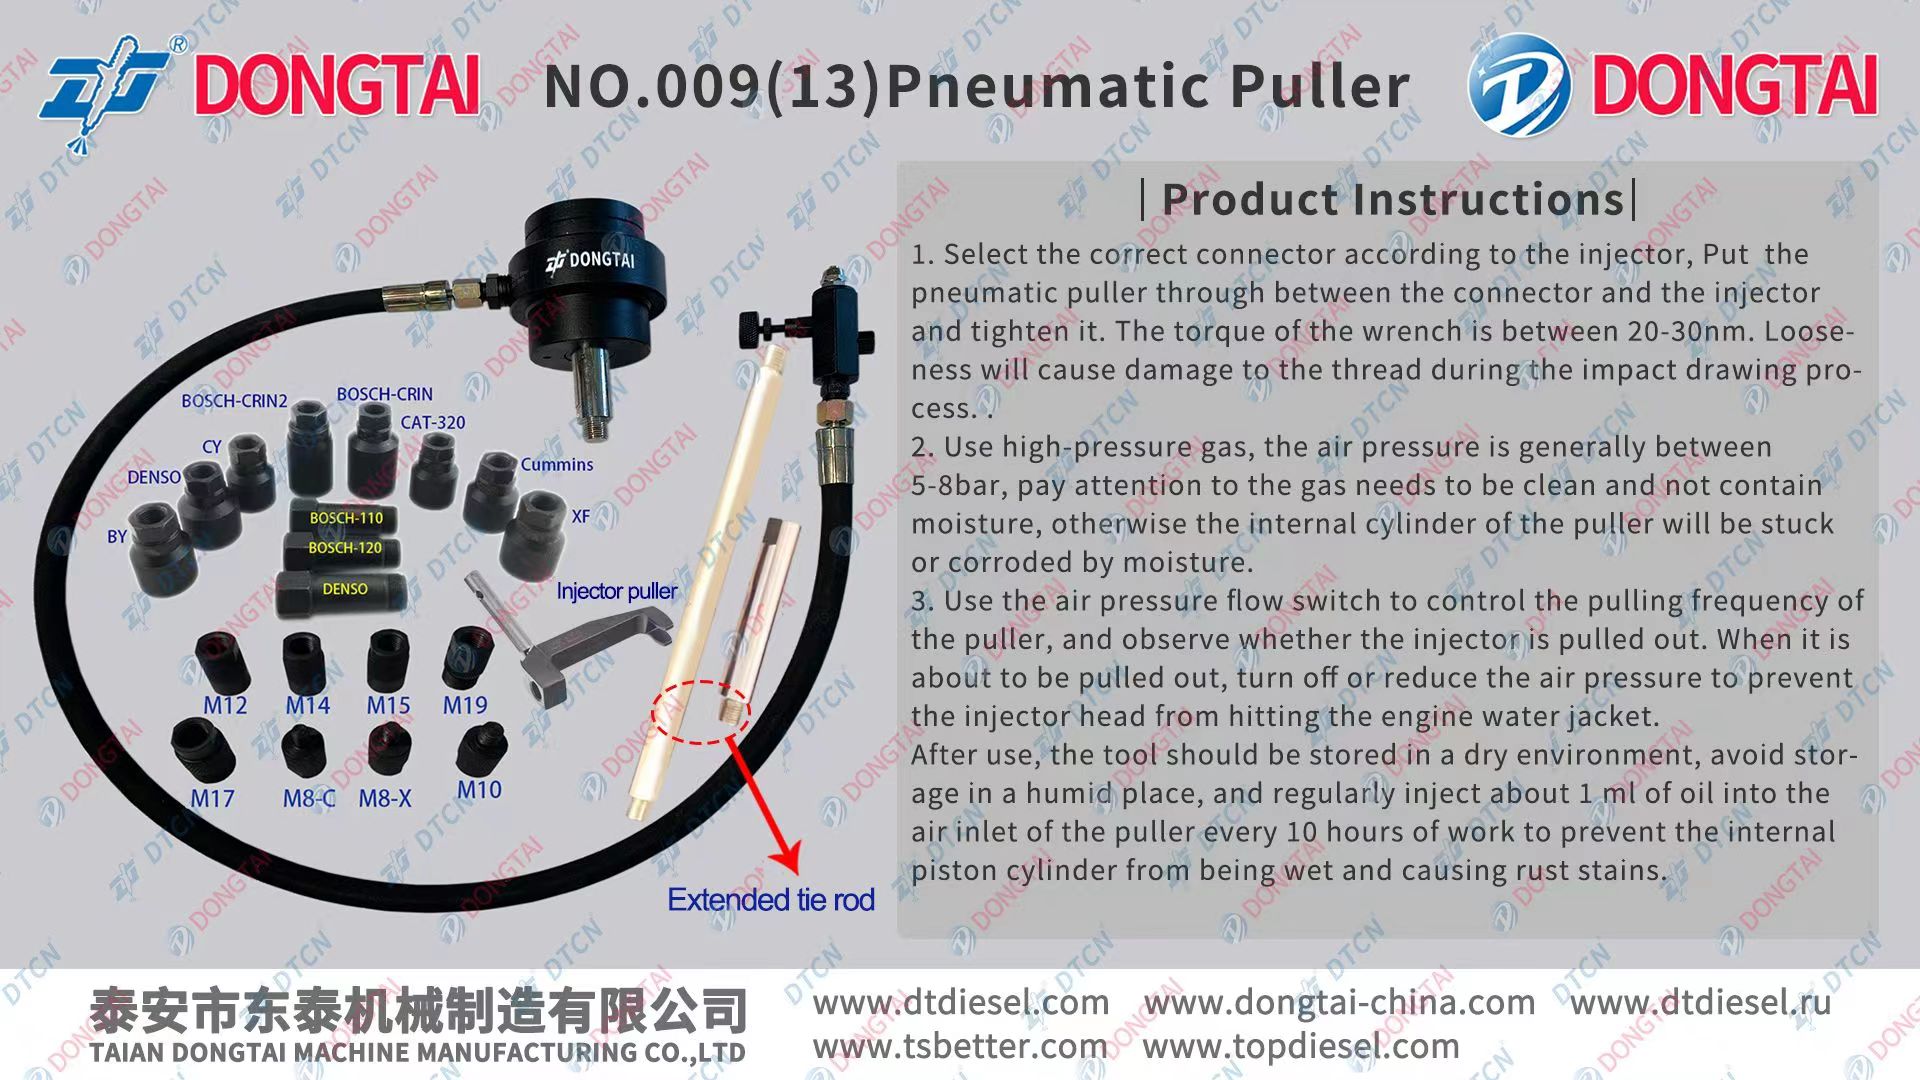 NO.009(13) Pneumatic Puller